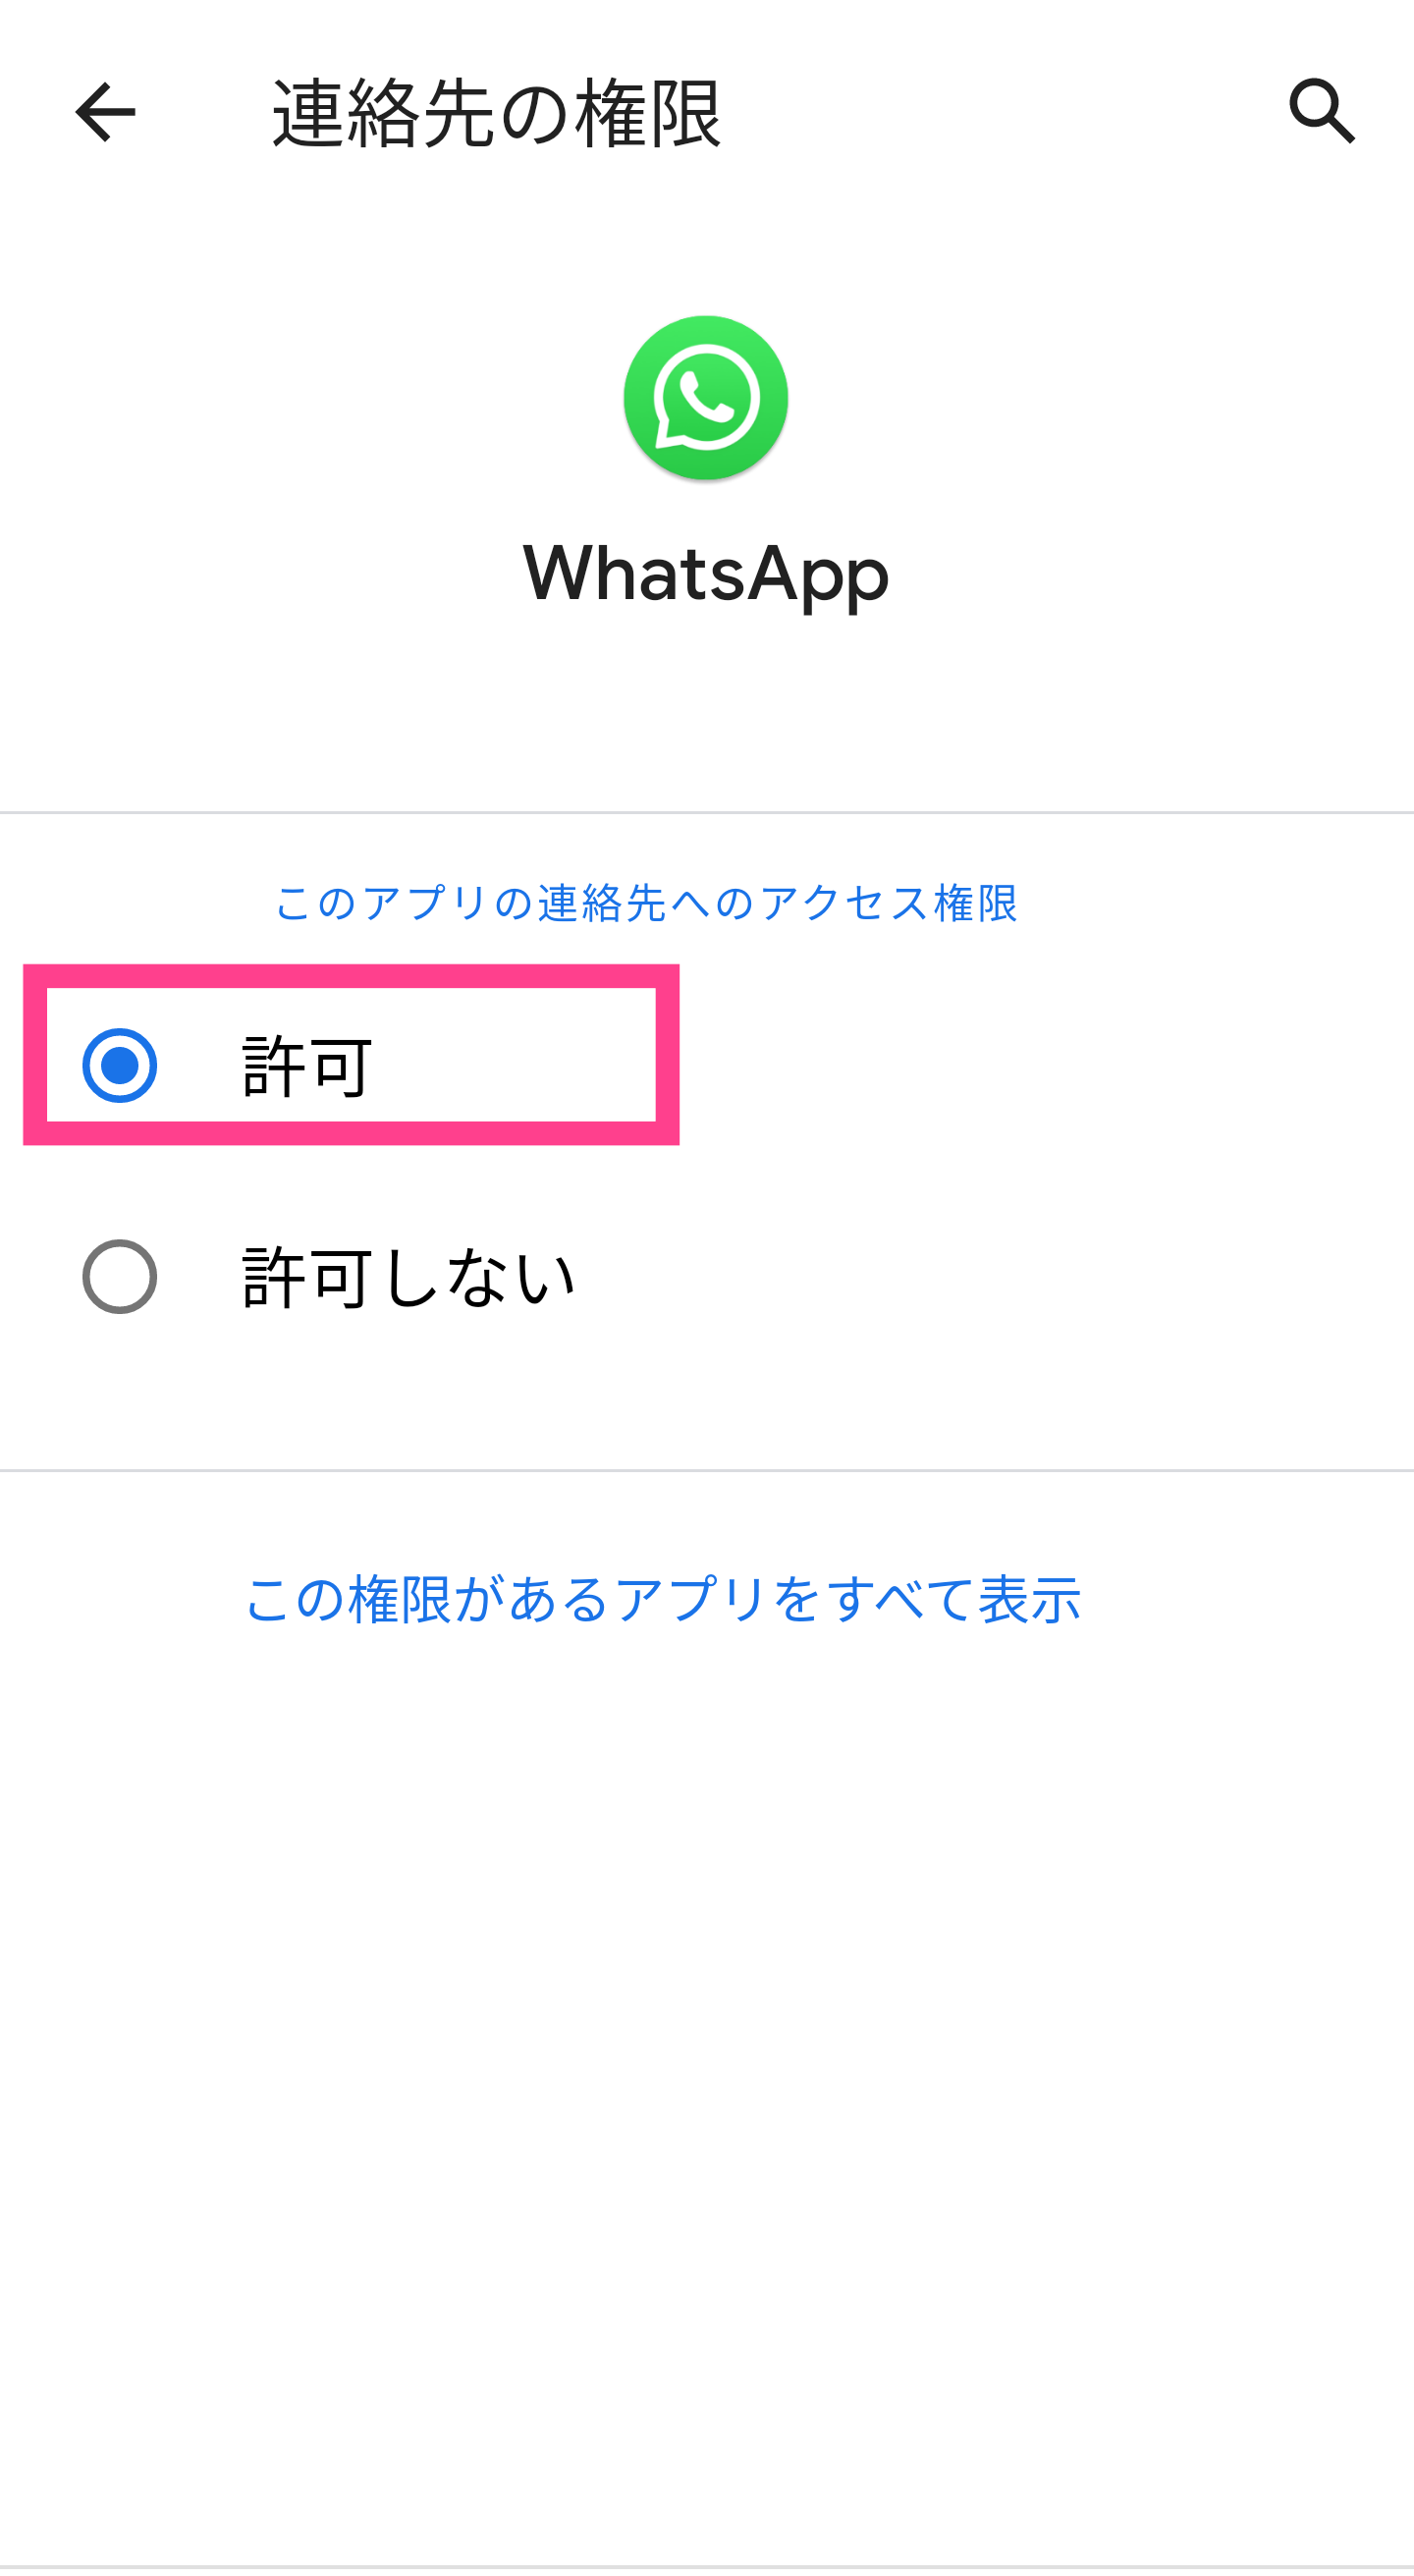 WhatsApp連絡先アクセス許可